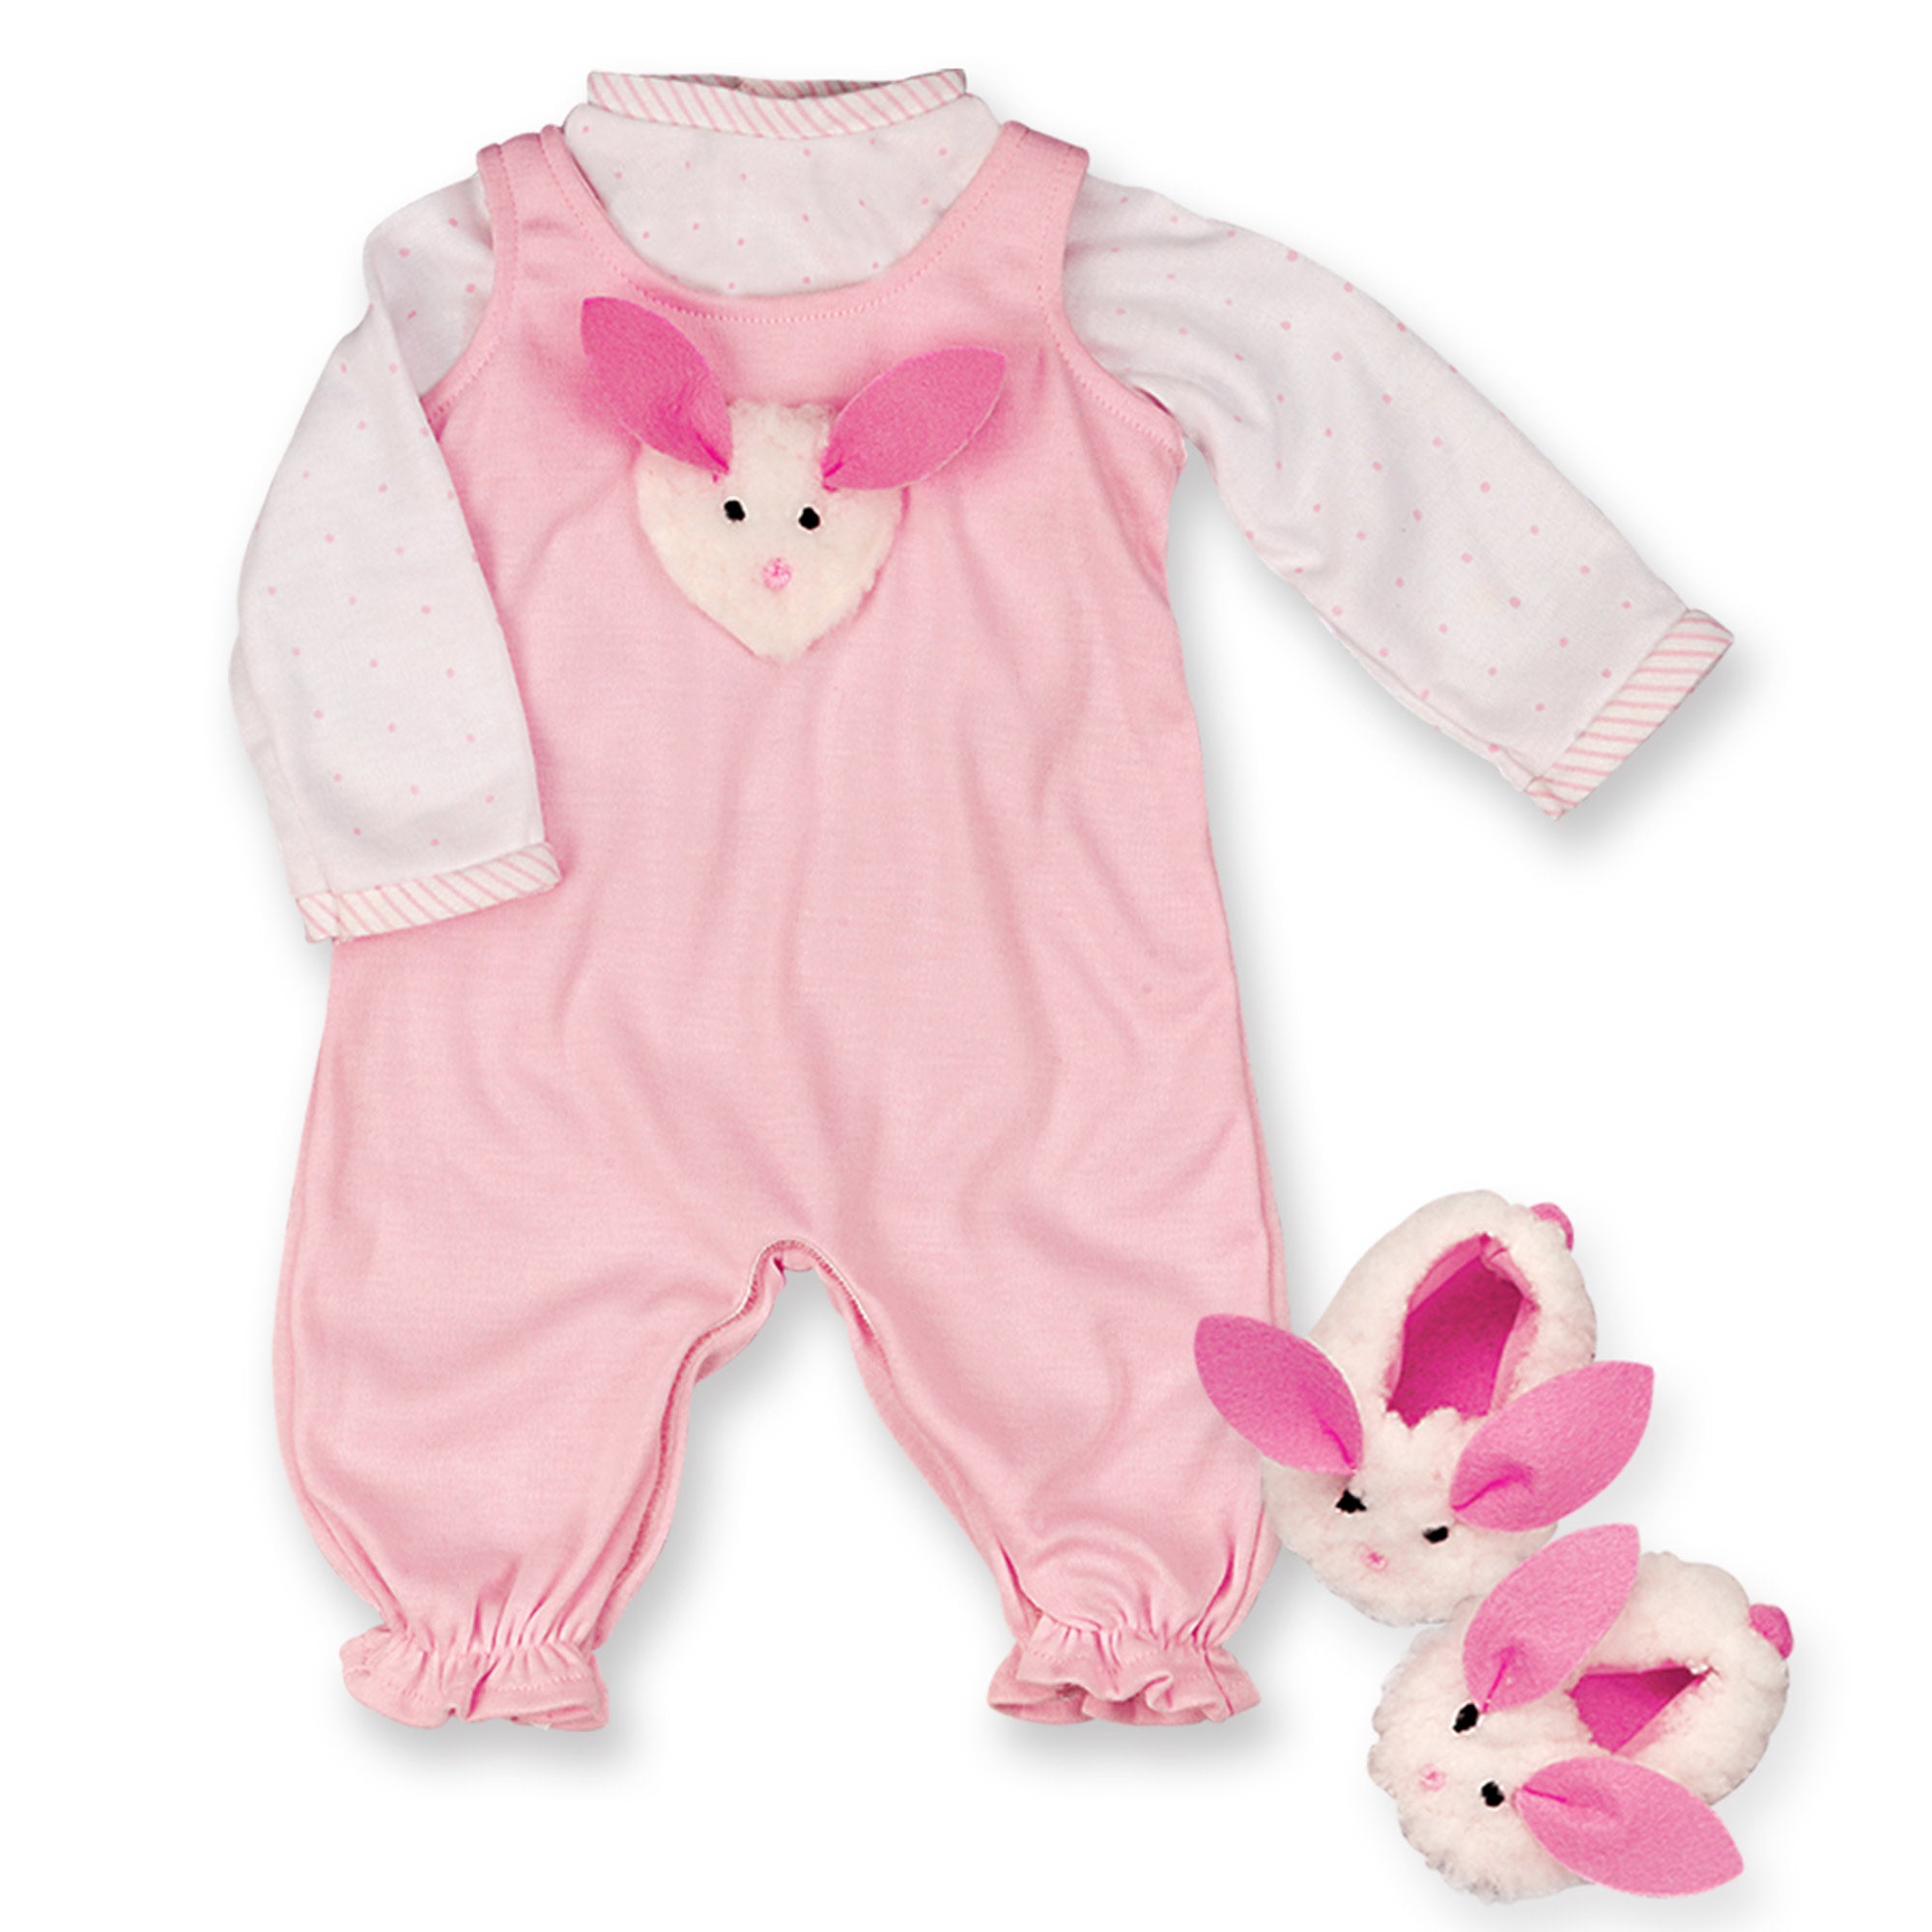 Sophia’s Bunny Jumper with Fluffy Slippers & Long-Sleeved Polka-Dot Undershirt for 12” Baby Dolls, Light Pink